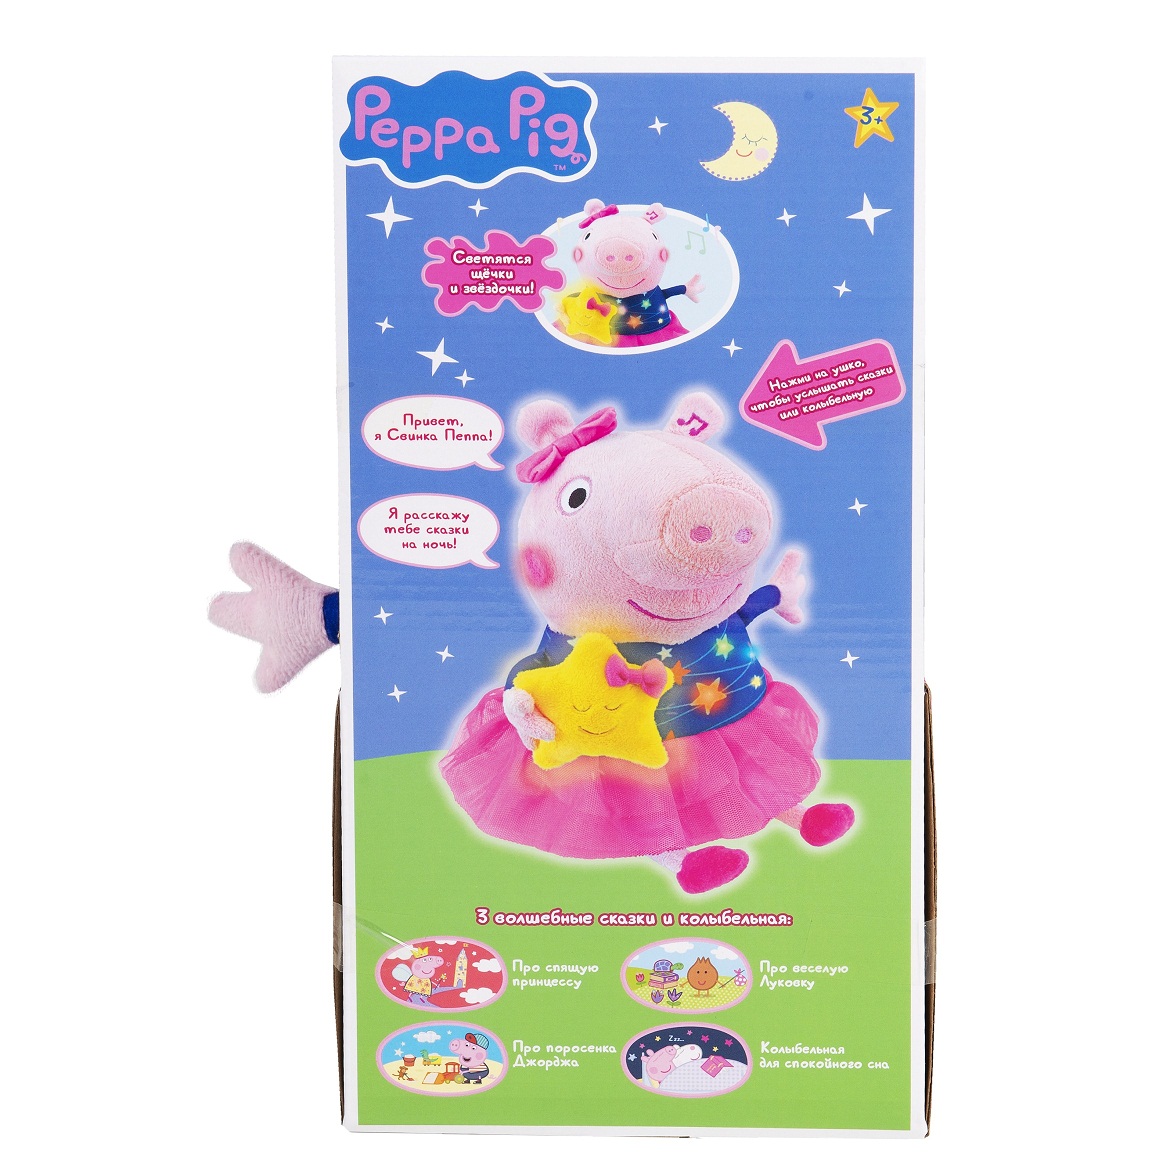 Мягкая игрушка-ночник ТМ Peppa Pig - Свинка Пеппа, свет, звук  